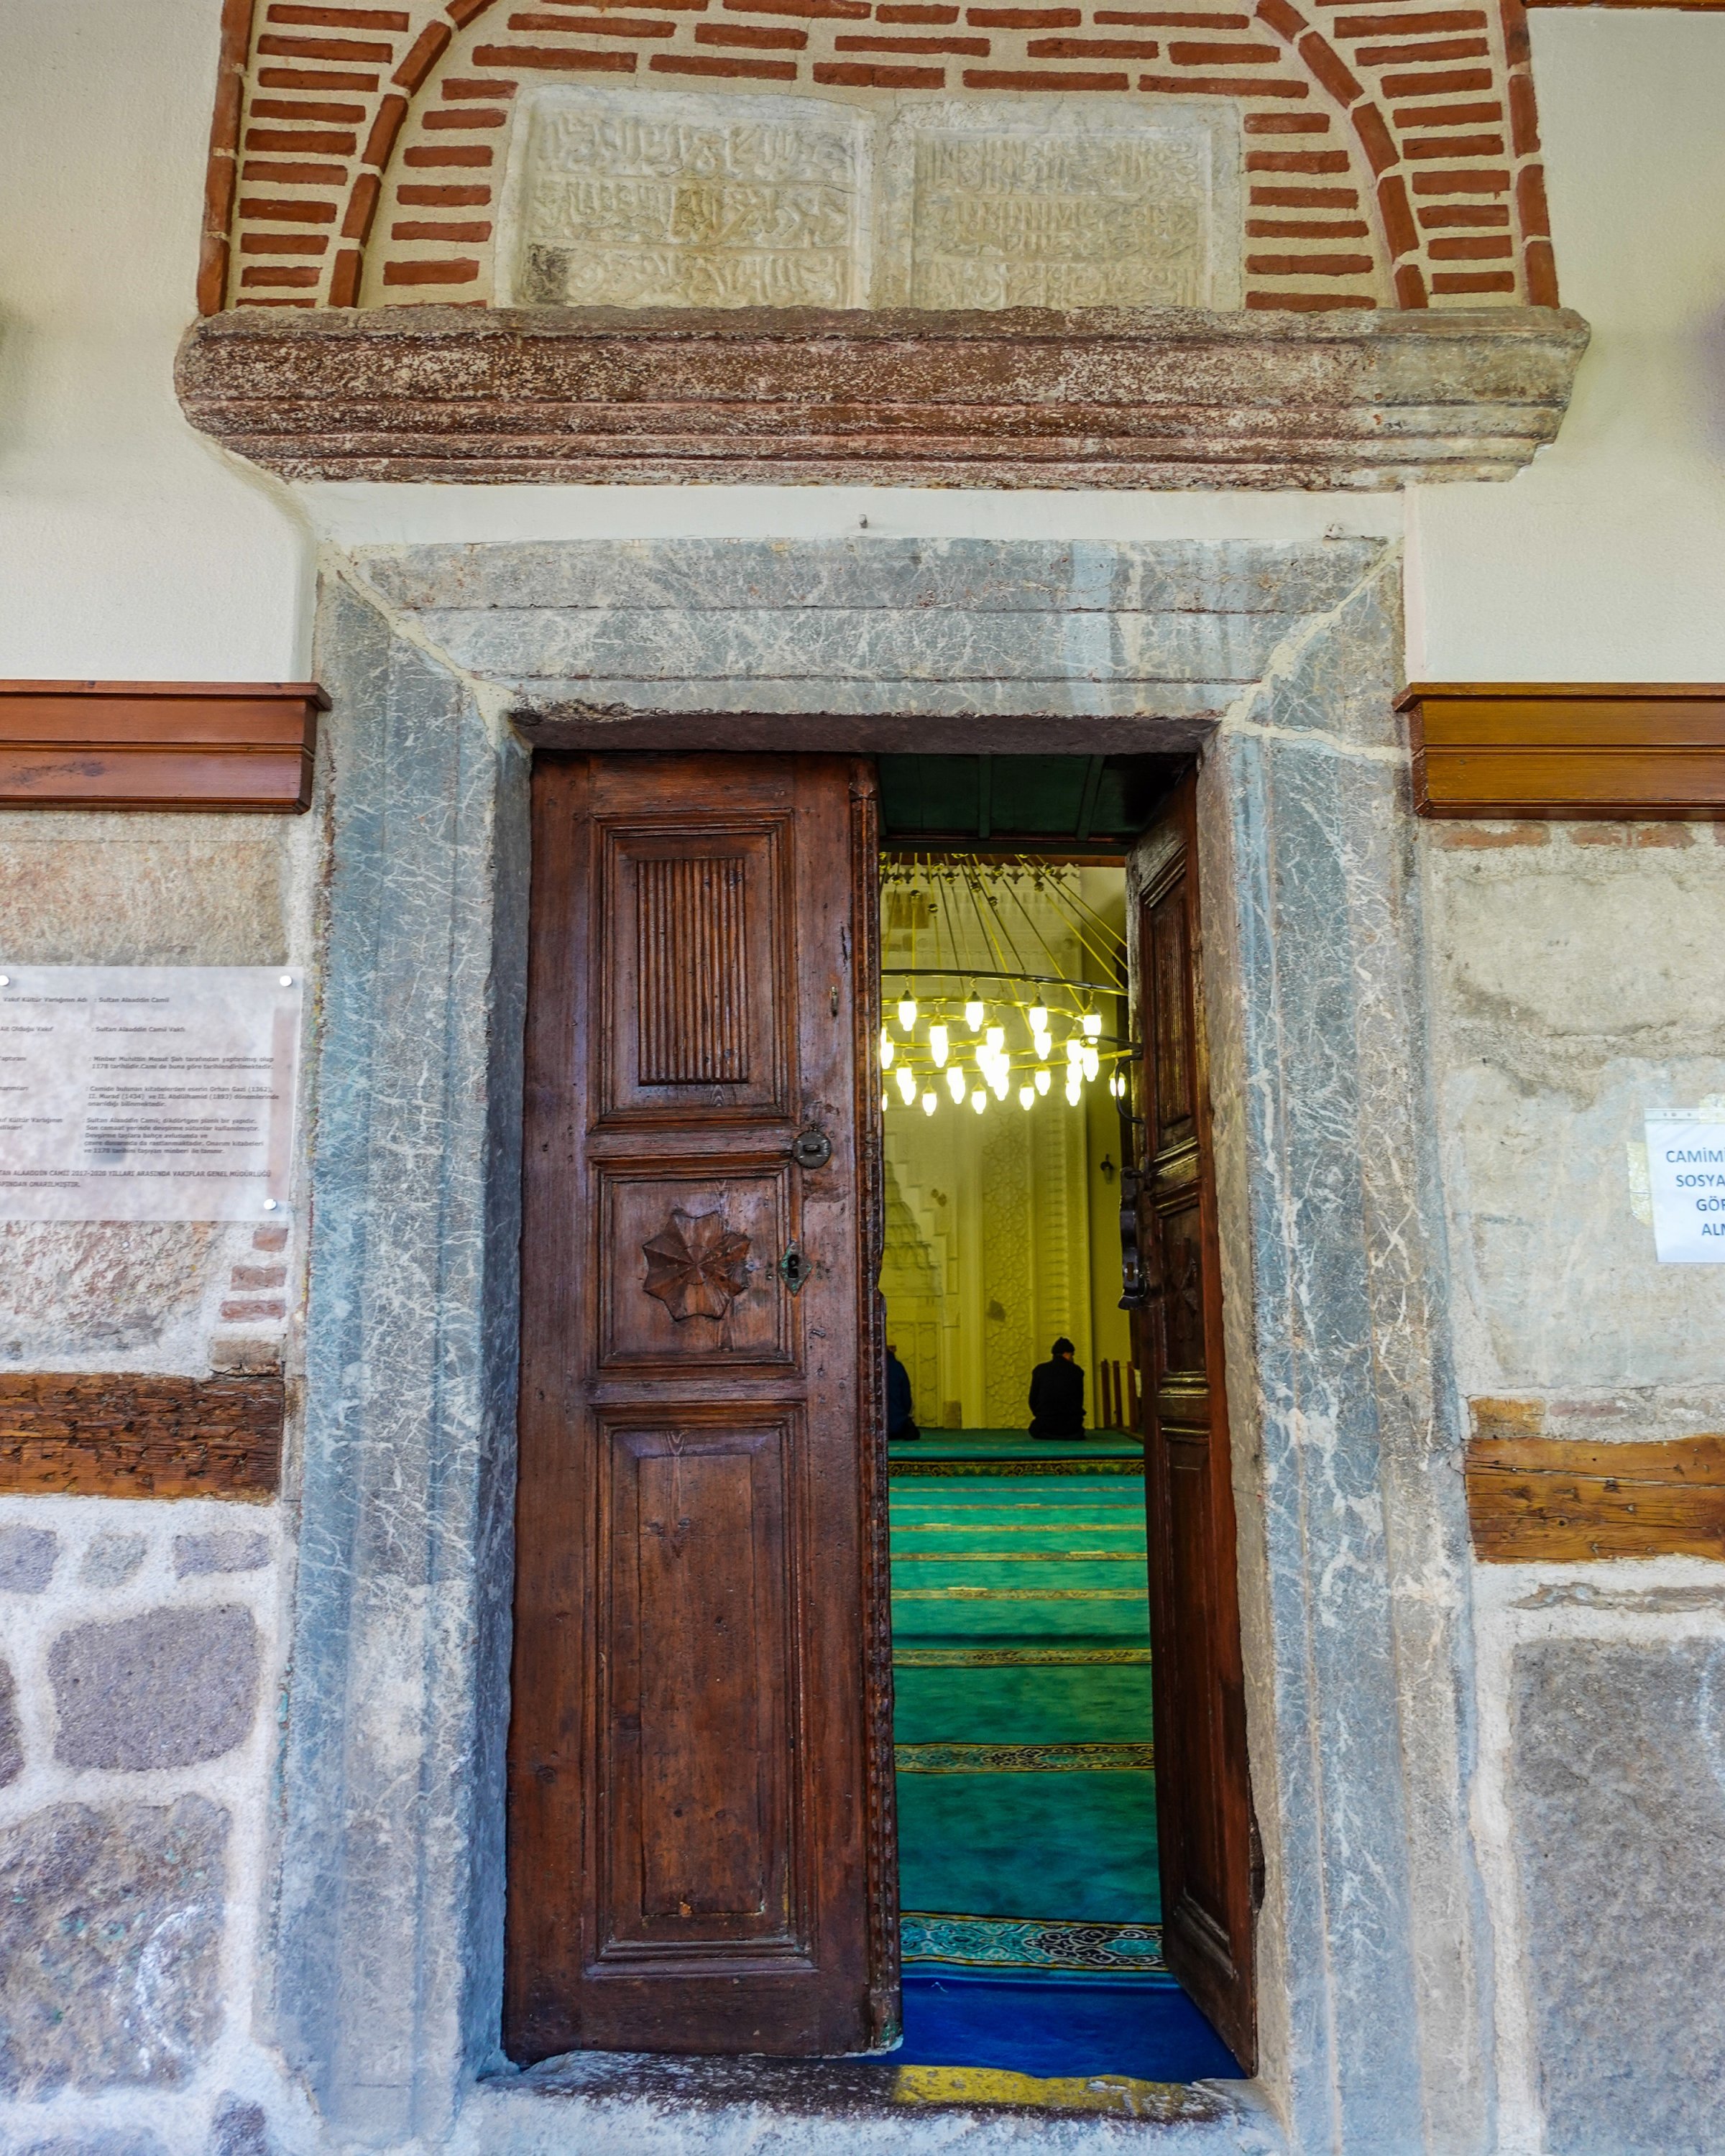   La porte de la mosquée du Sultan Alaaddin.  (Photo par Argun Konuk)